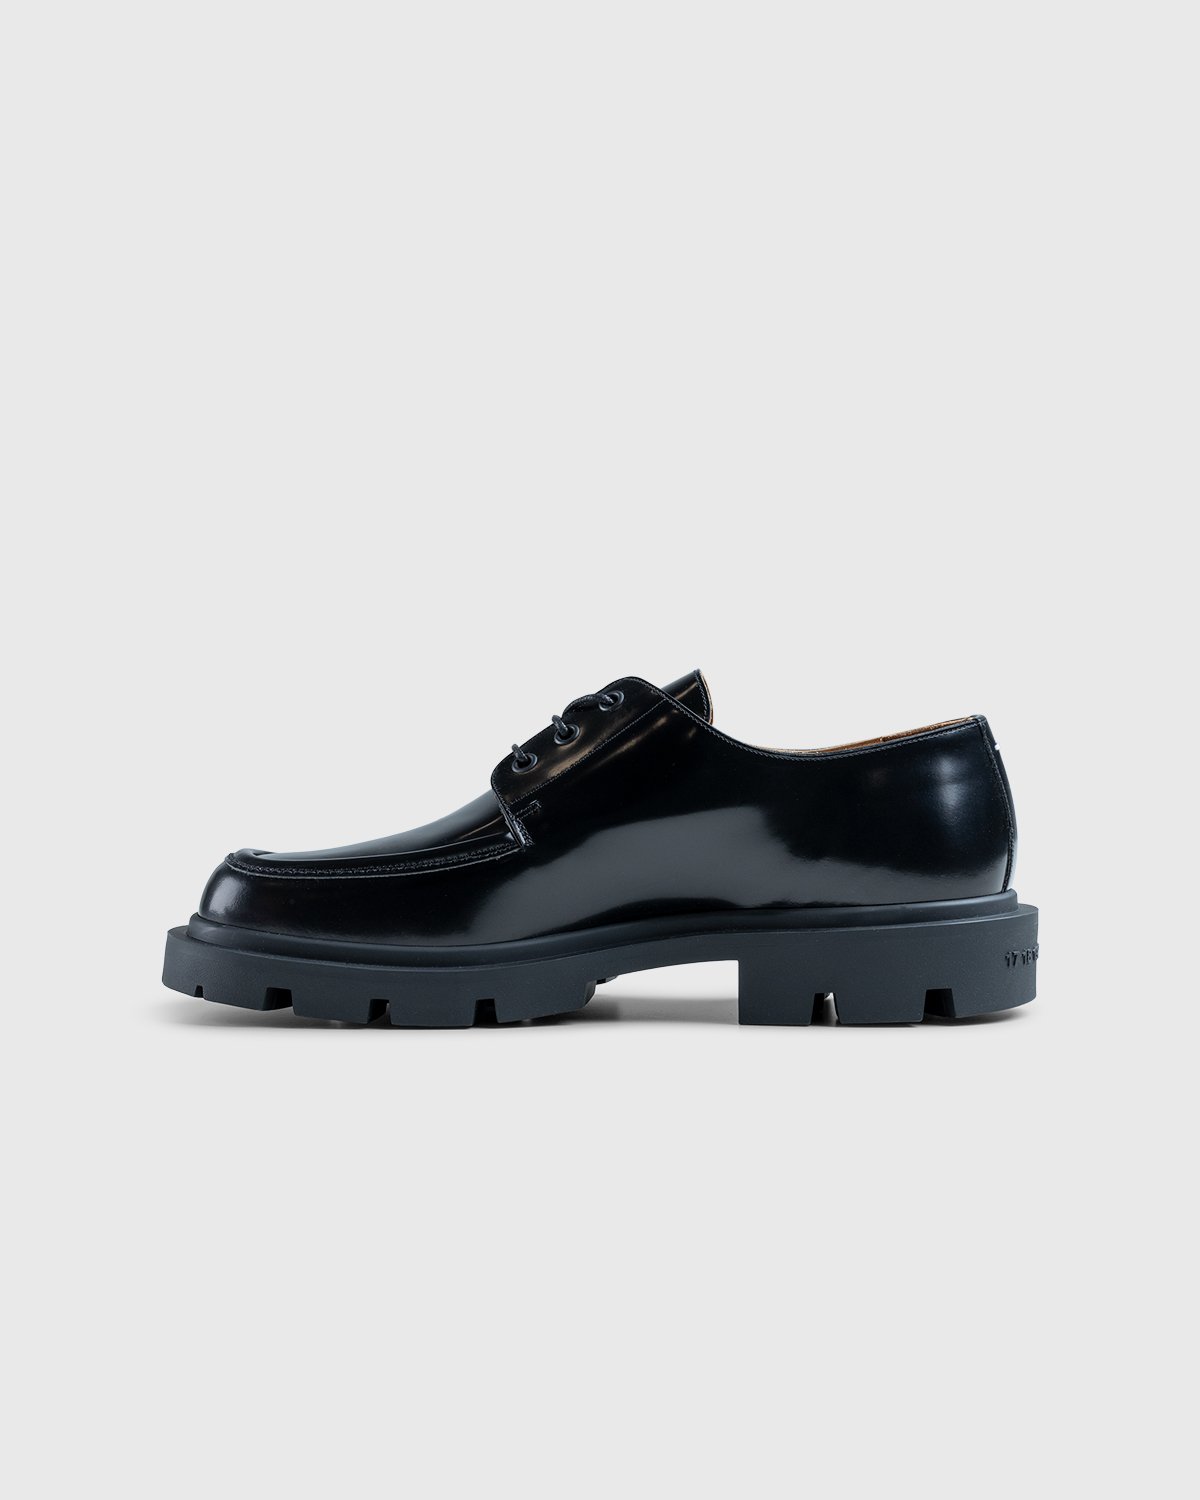 Maison Margiela - Cleated Sole Shoes Black - Footwear - Black - Image 7